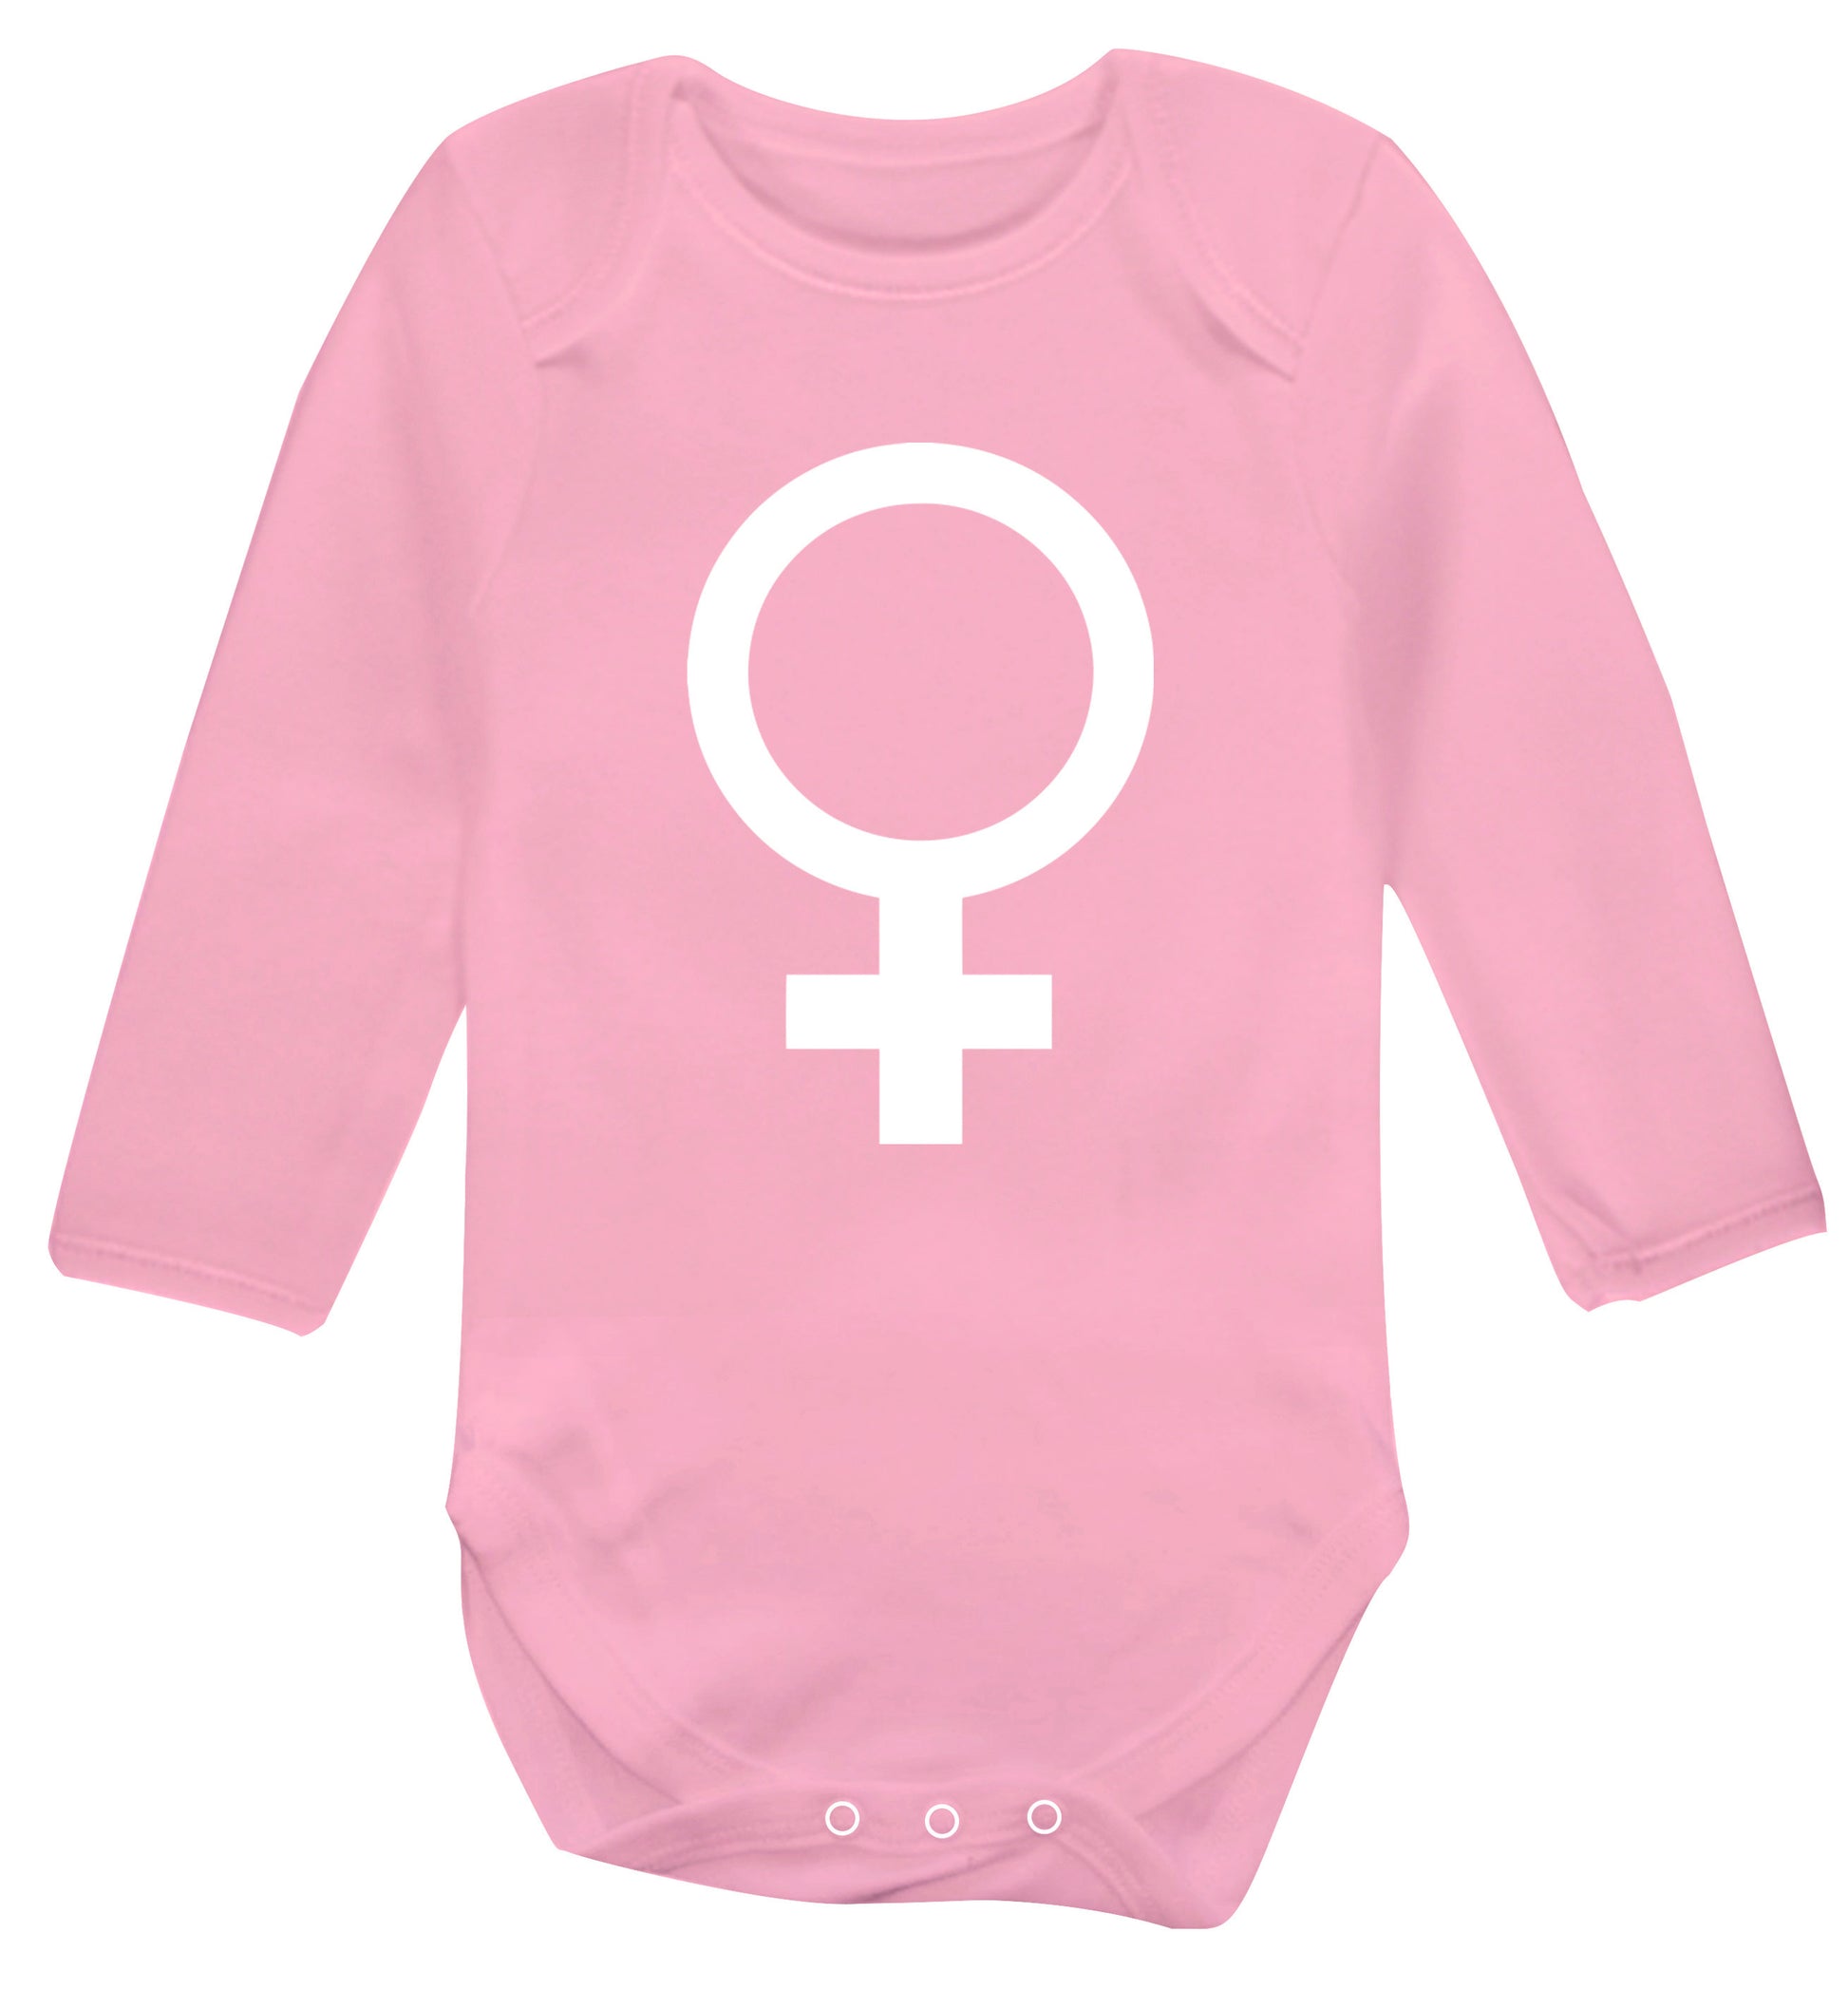 Female symbol large Baby Vest long sleeved pale pink 6-12 months